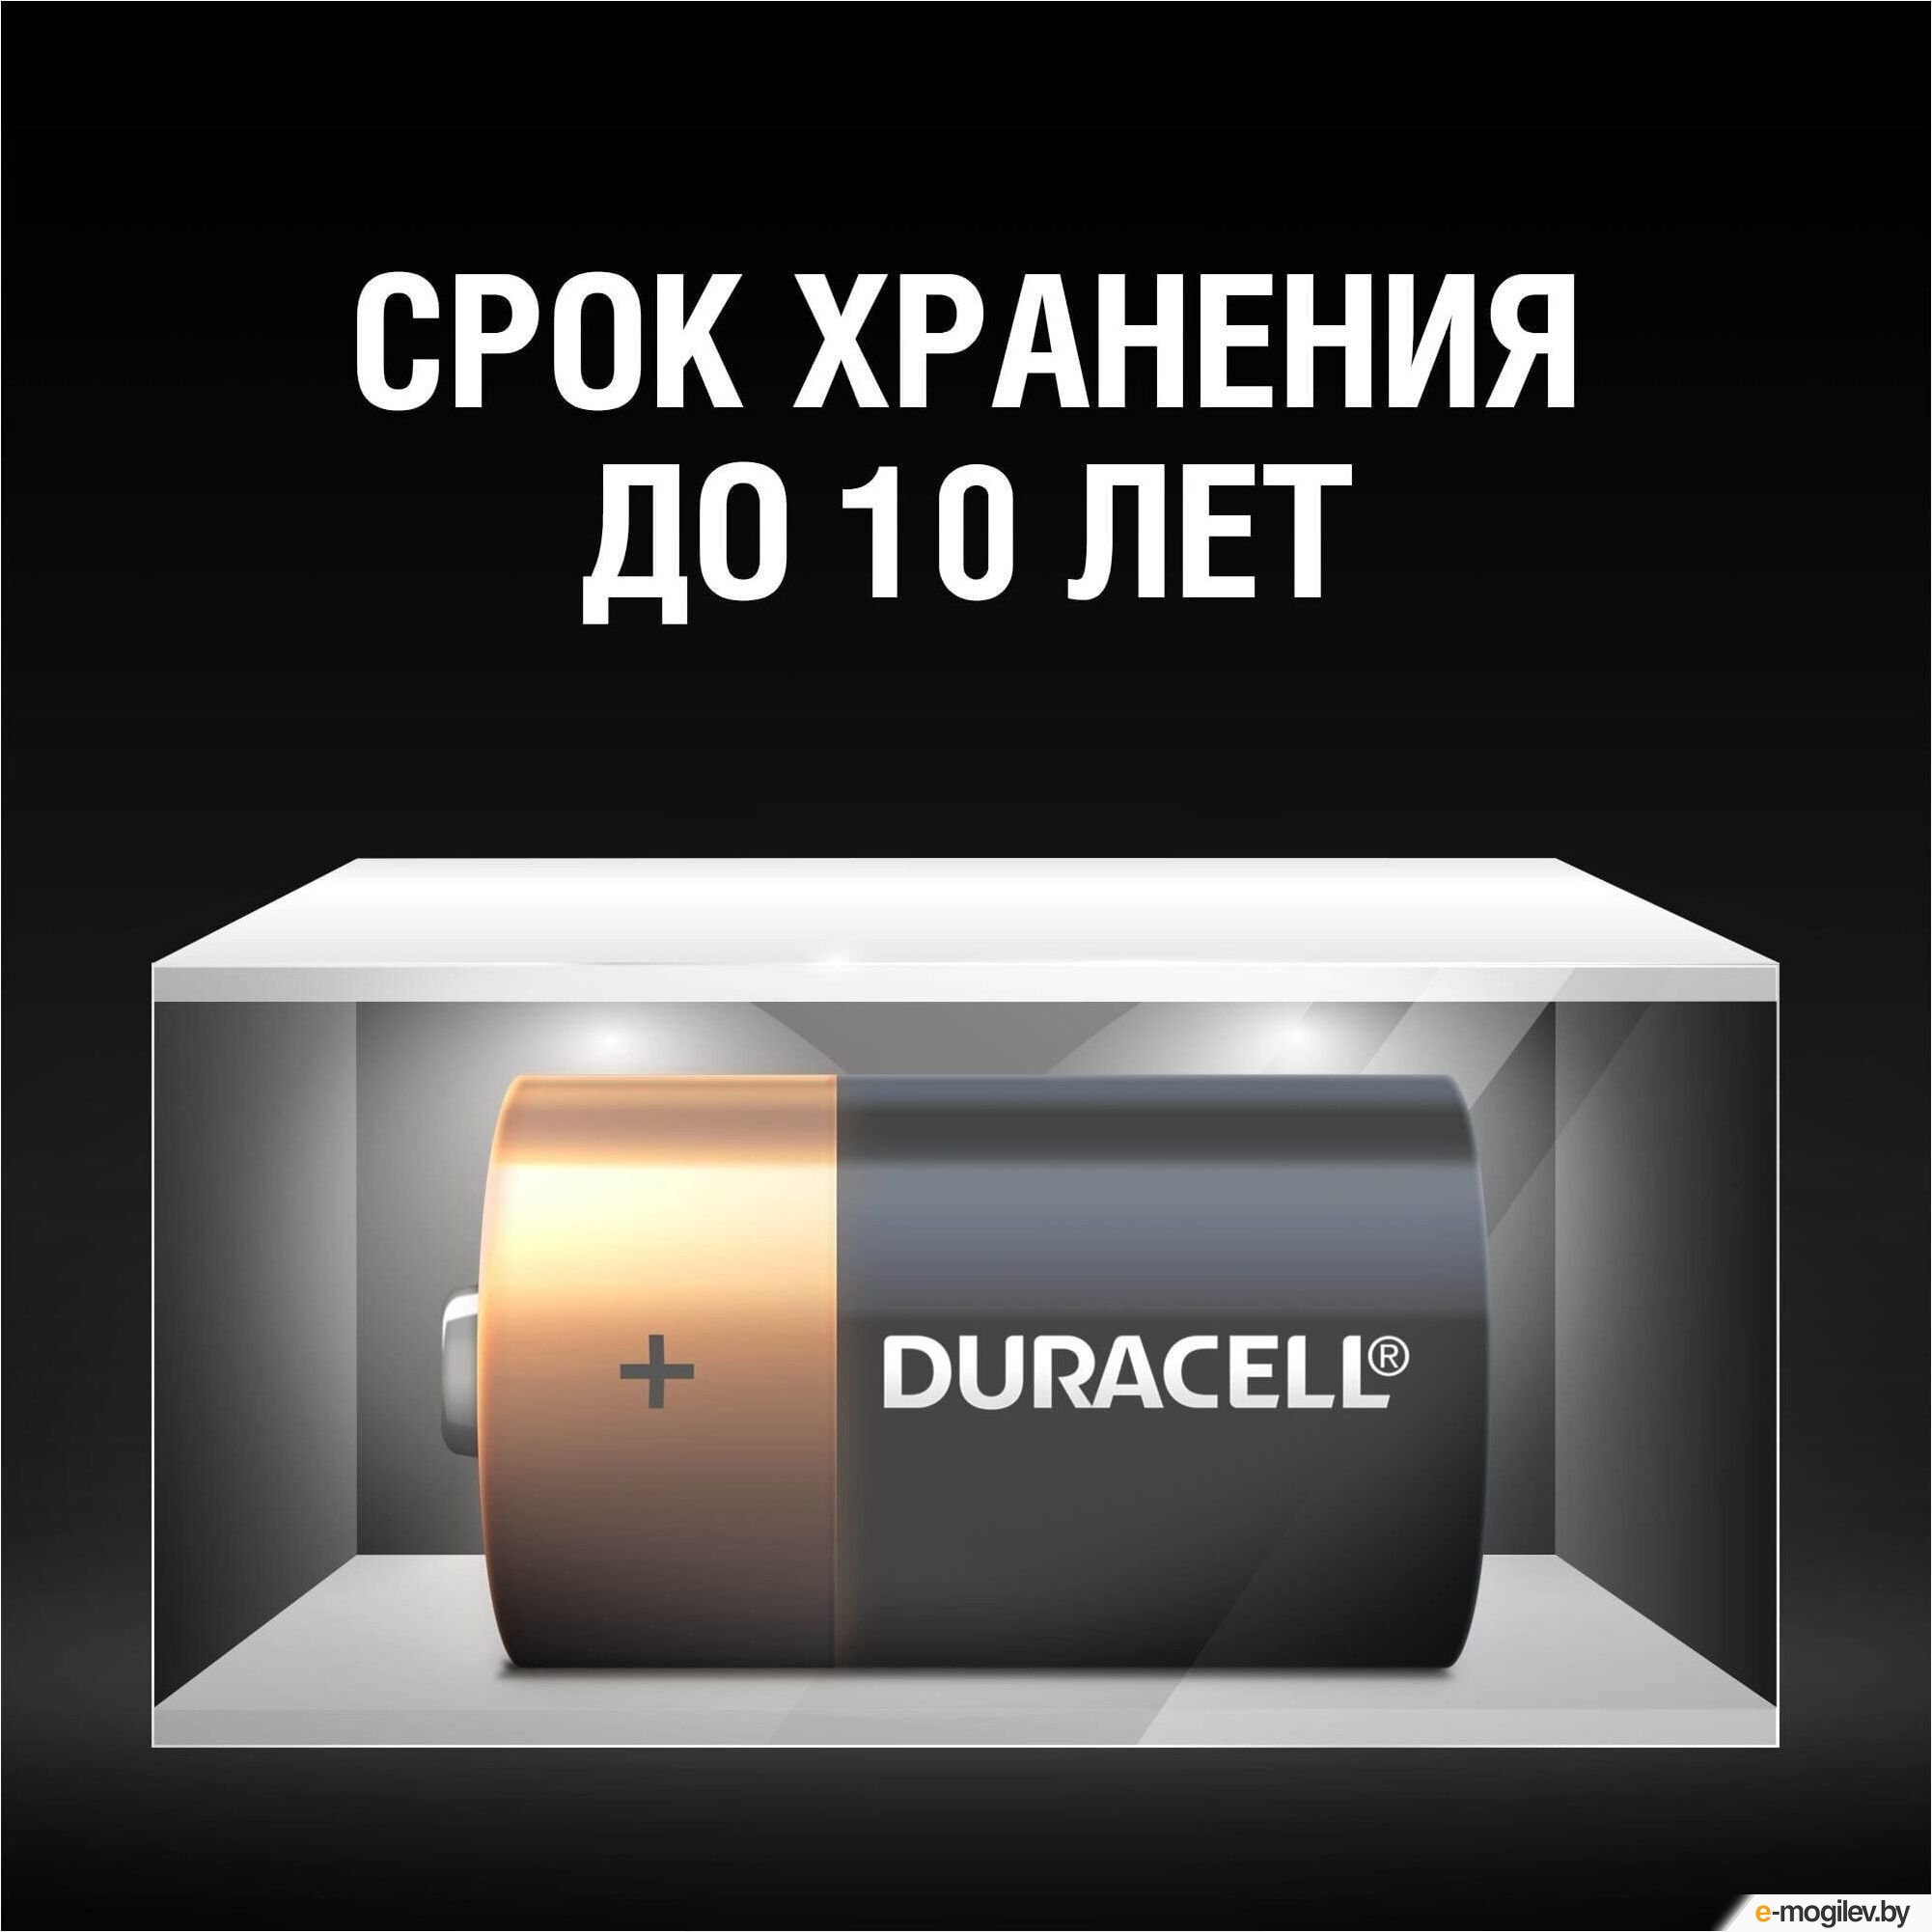 Комплект батареек Duracell Basic LR14 (2шт)